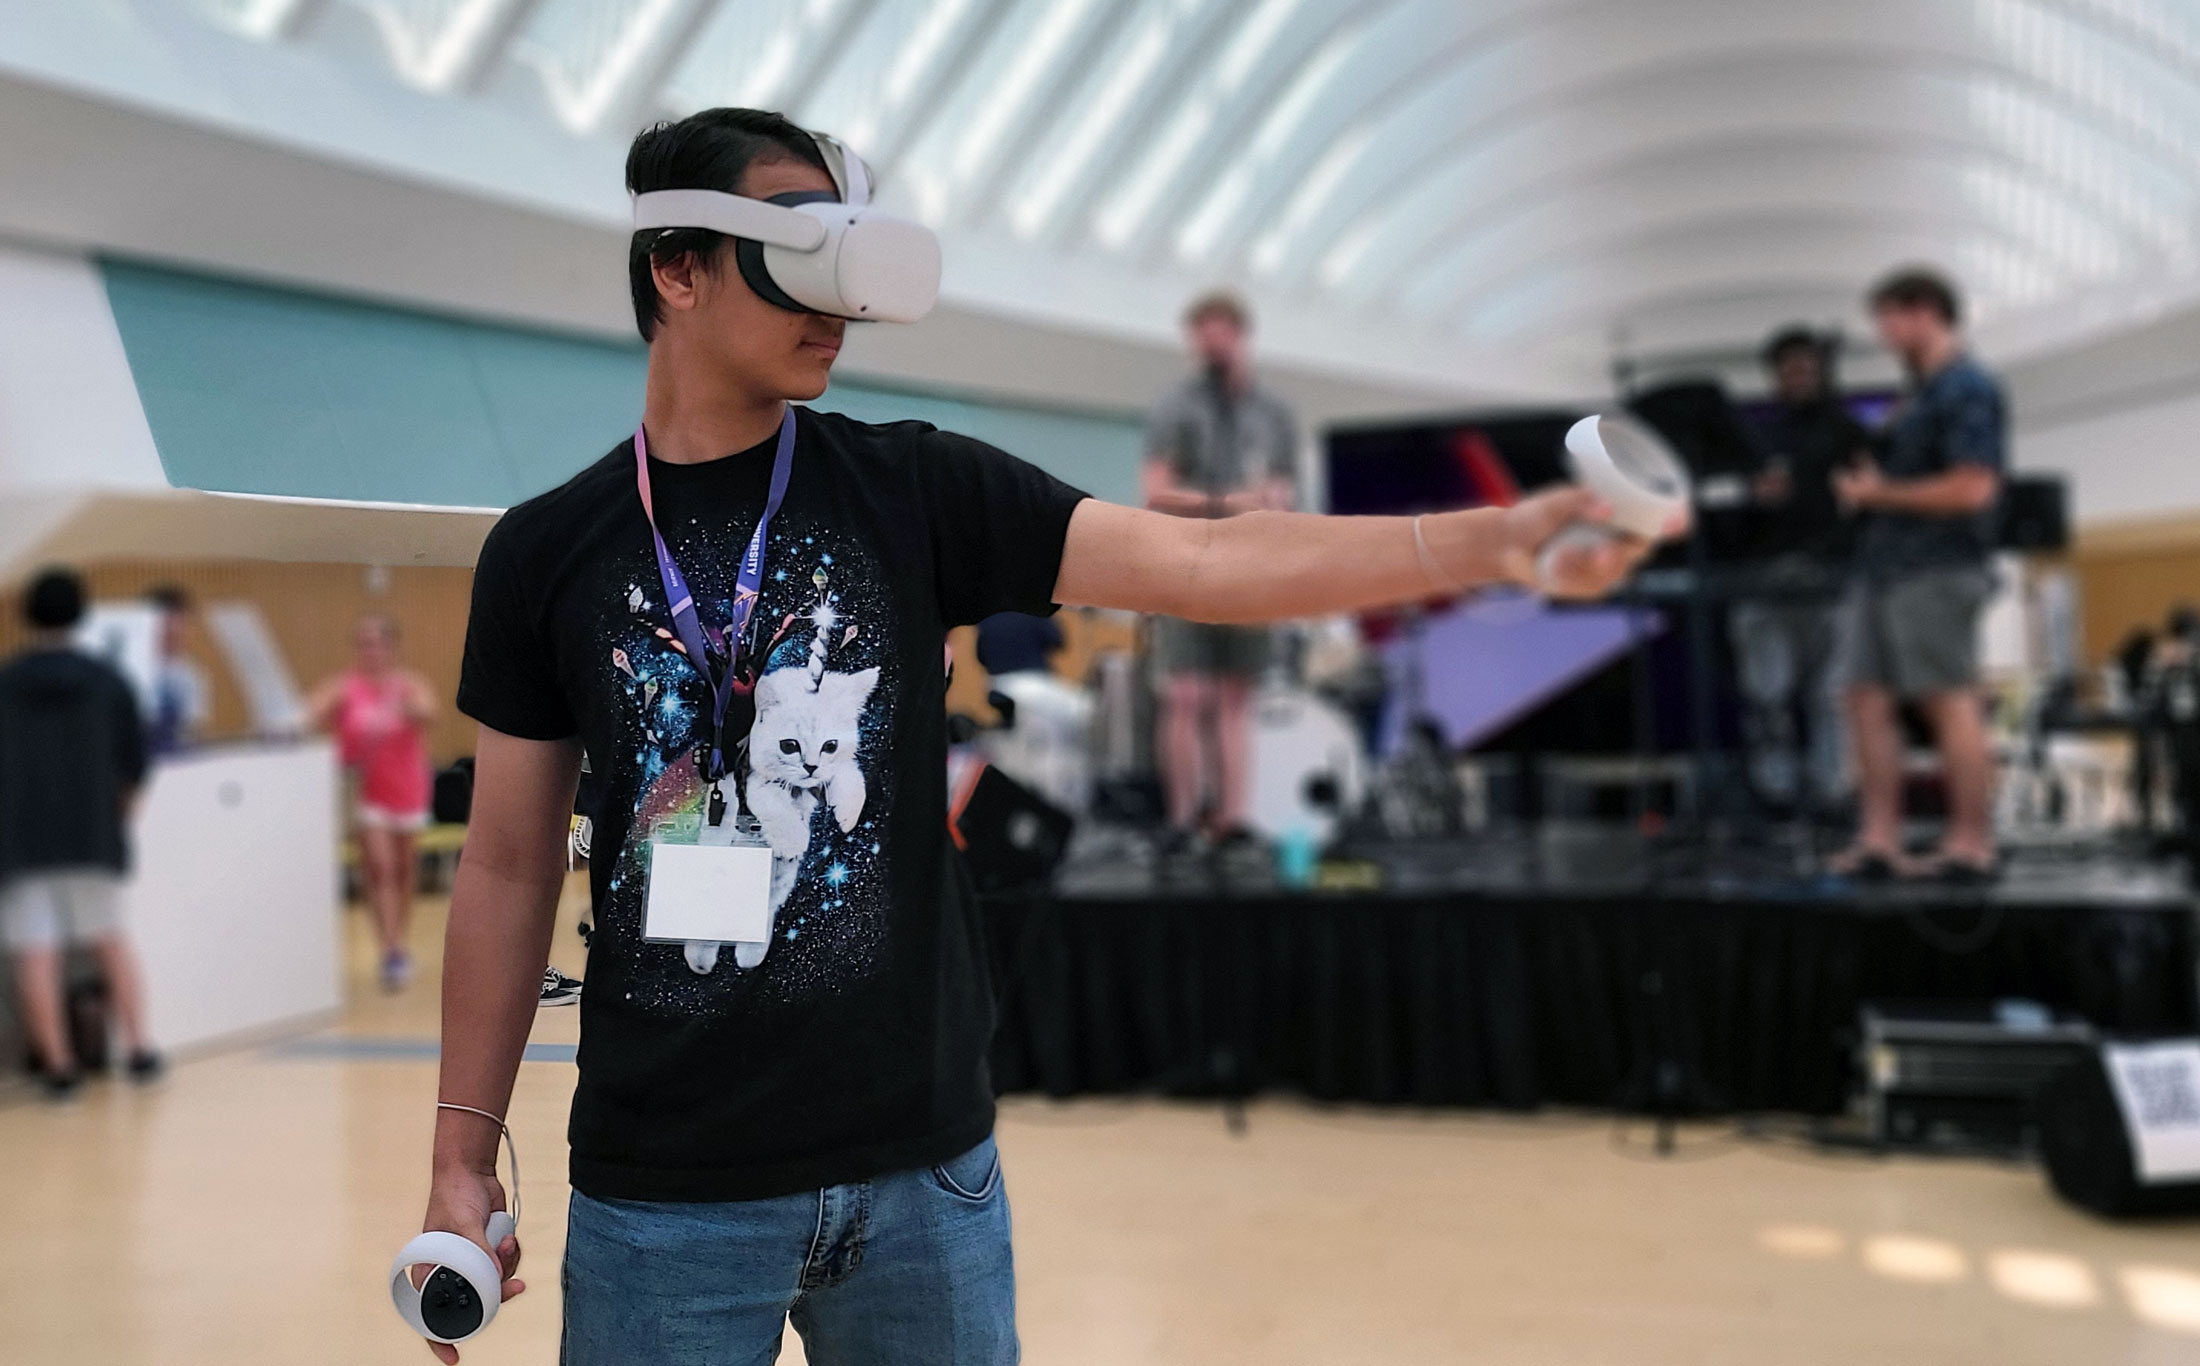 High schooler Chris Bruckner plays a virtual reality game